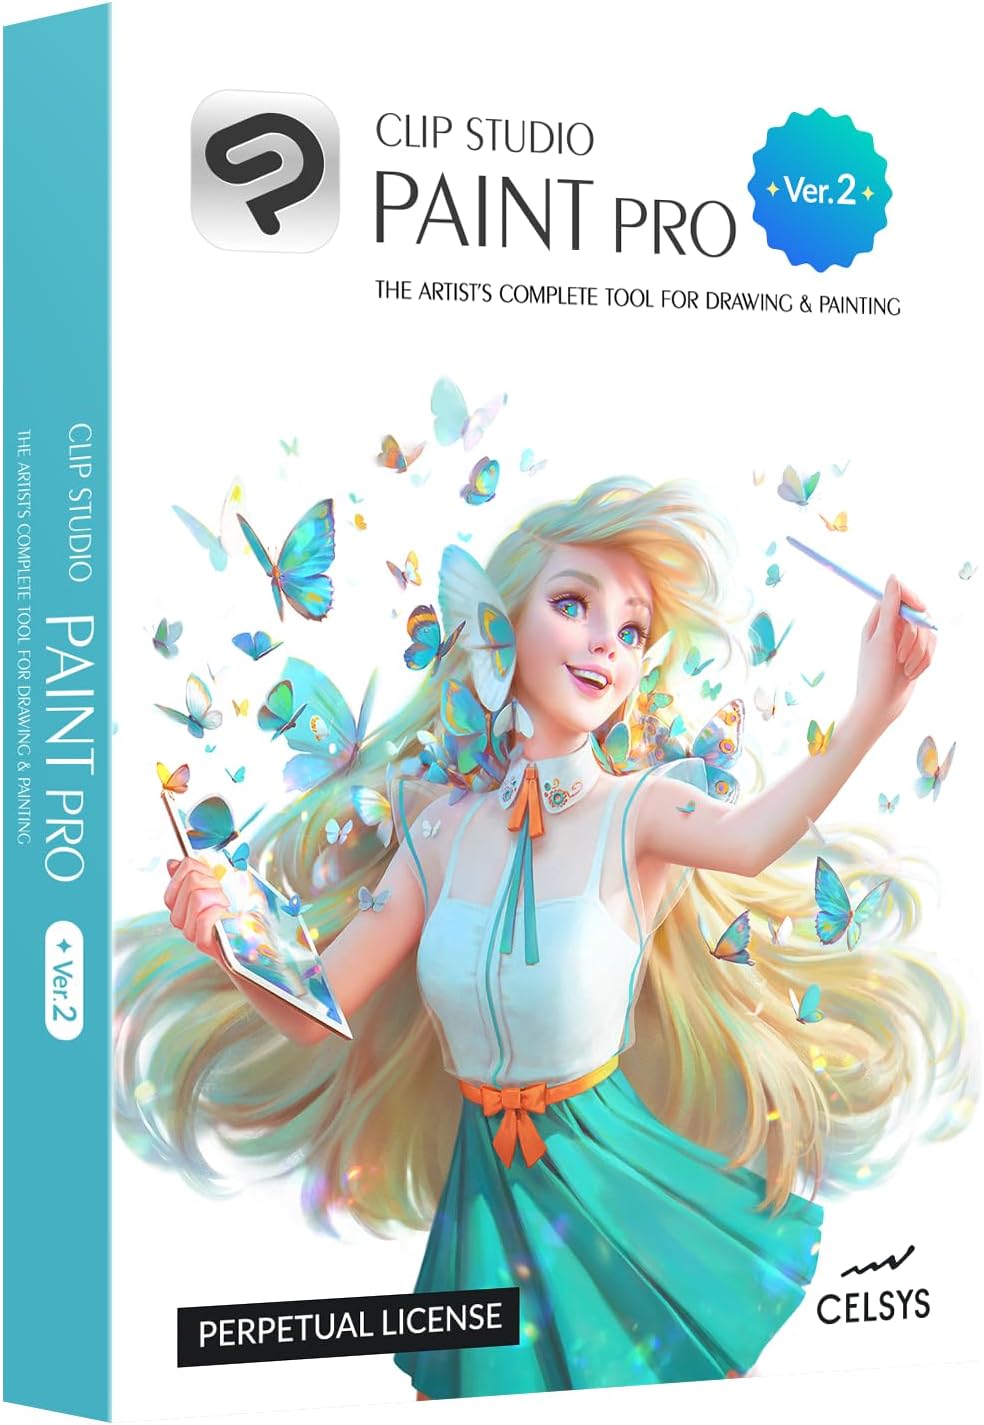 Clip Studio Paint Pro - Version 2 Perpetual License